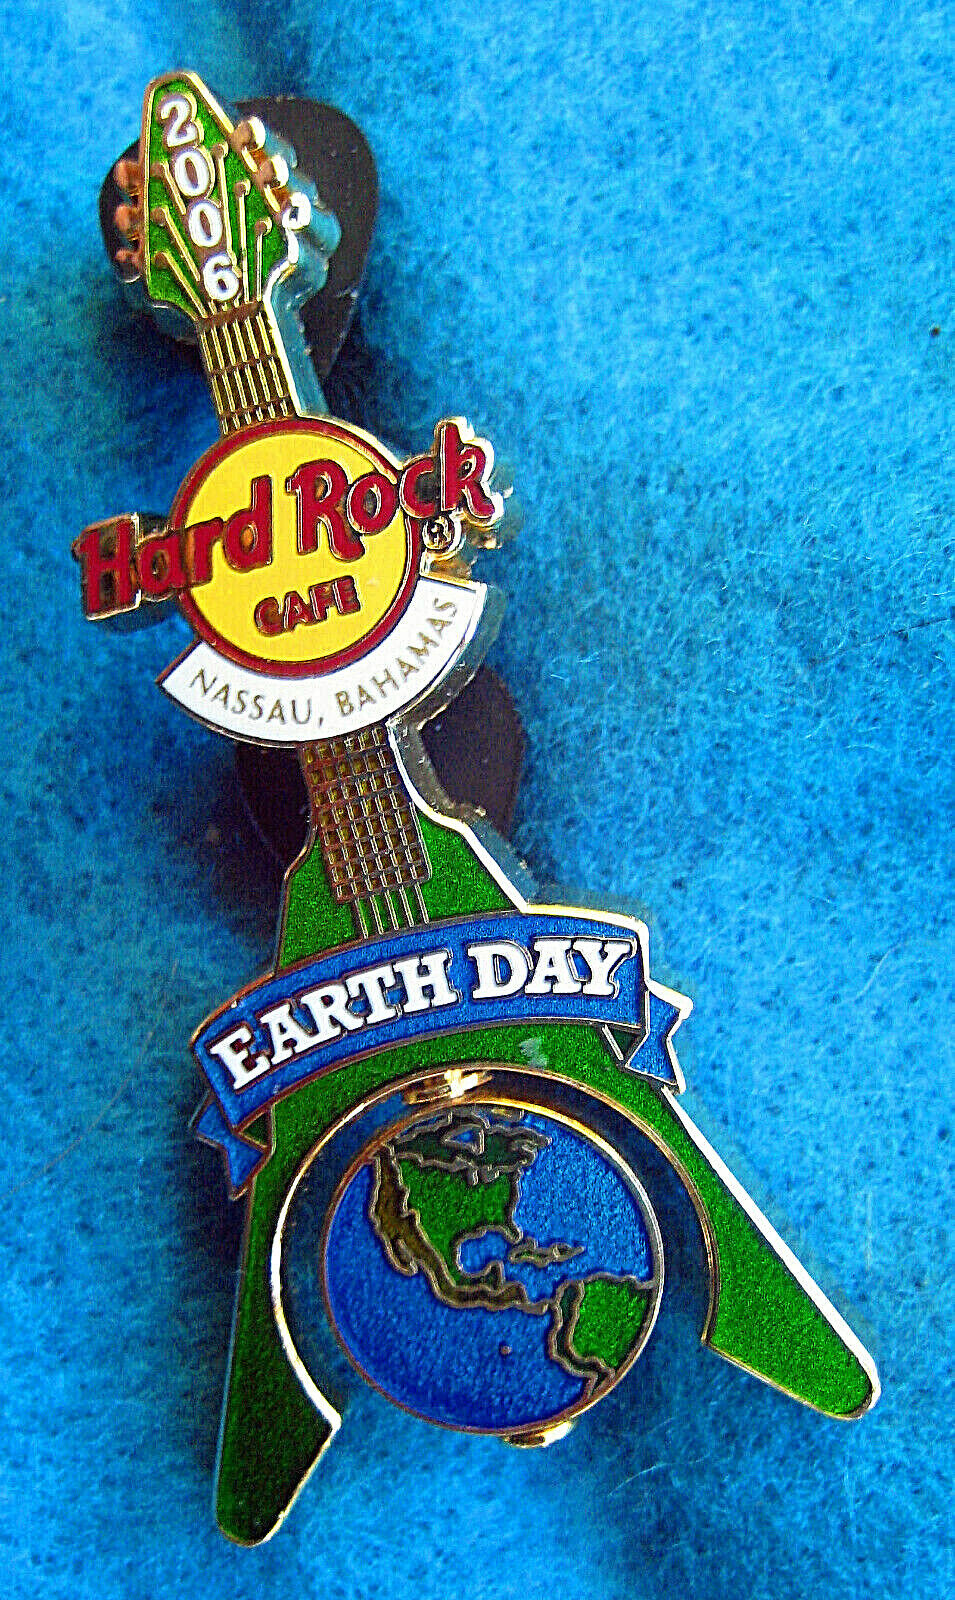 NASSAU 2006 EARTHDAY SPIN GIBSON PLANET GLOBE FLYING V GUITAR Hard Rock Cafe PIN